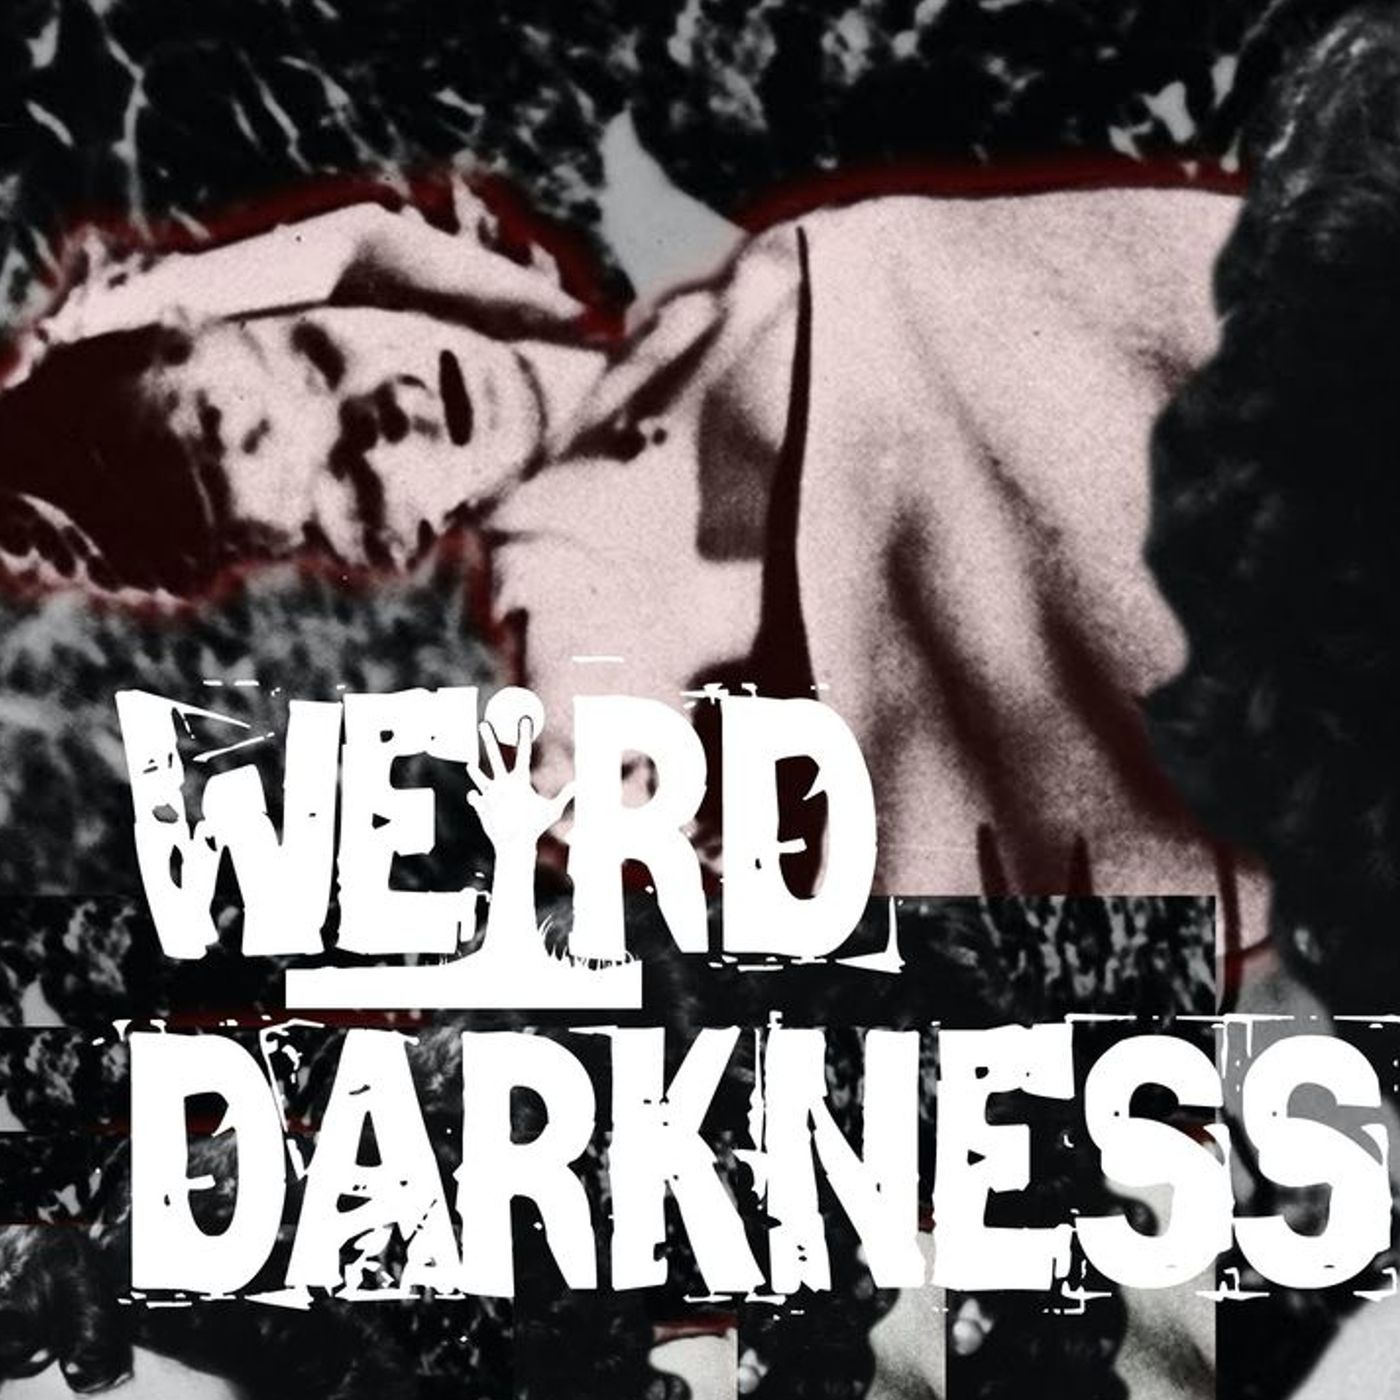 “THE CHILDREN OF SERIAL KILLERS” and More Dark True Stories! #WeirdDarkness